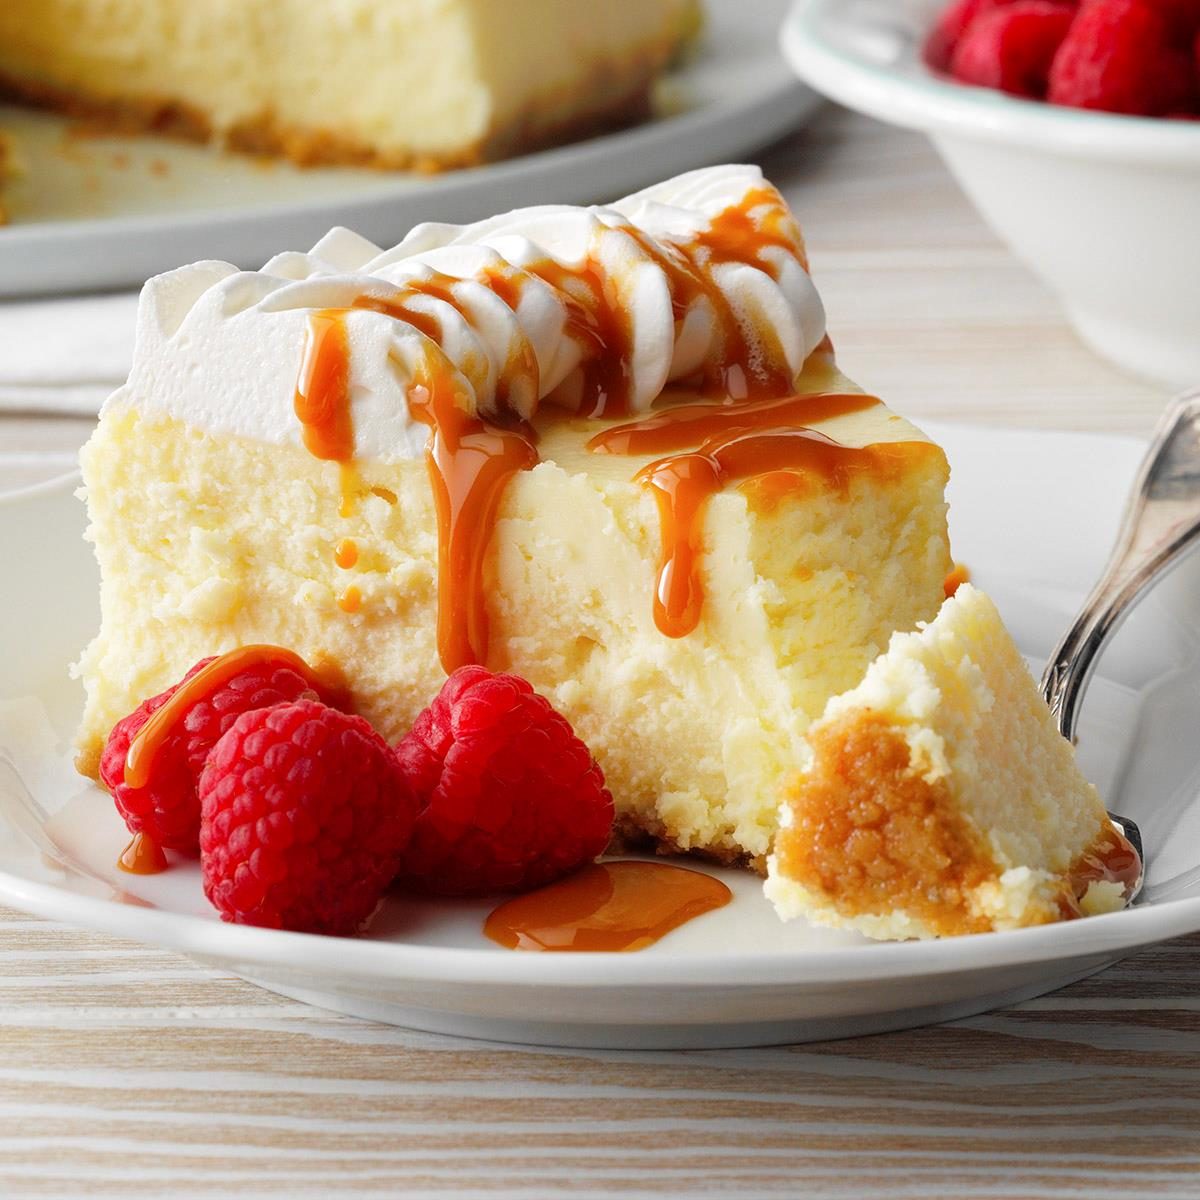 Mascarpone Cheesecake Recipe: How to Make It